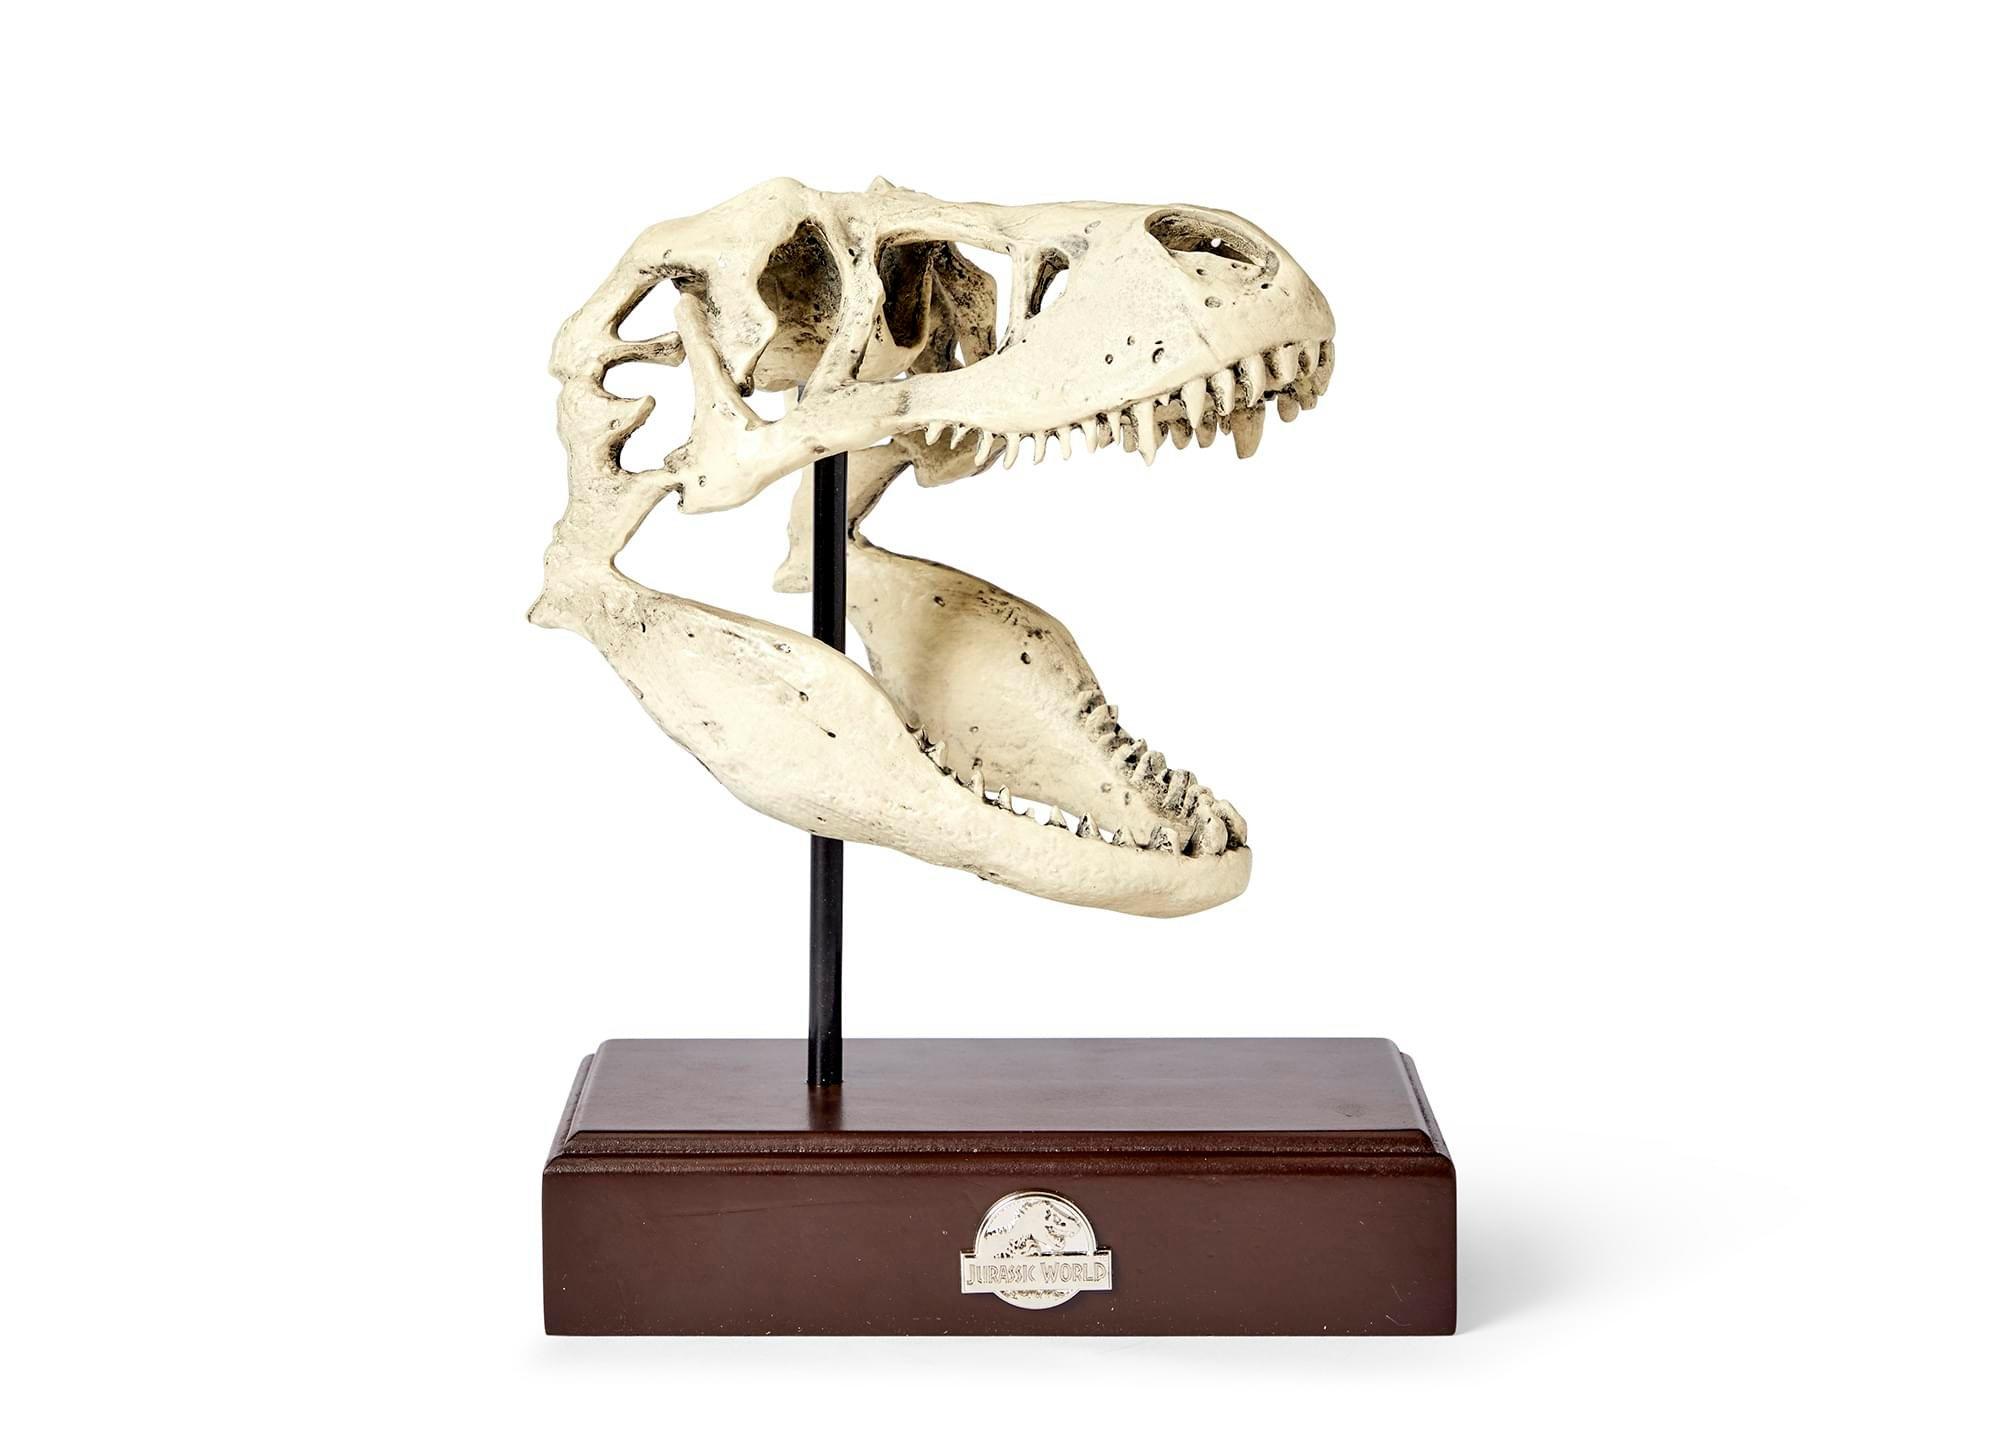 Toynk Jurassic World Tyrannosaurus Rex Skull Resin Replica 9-in Statue